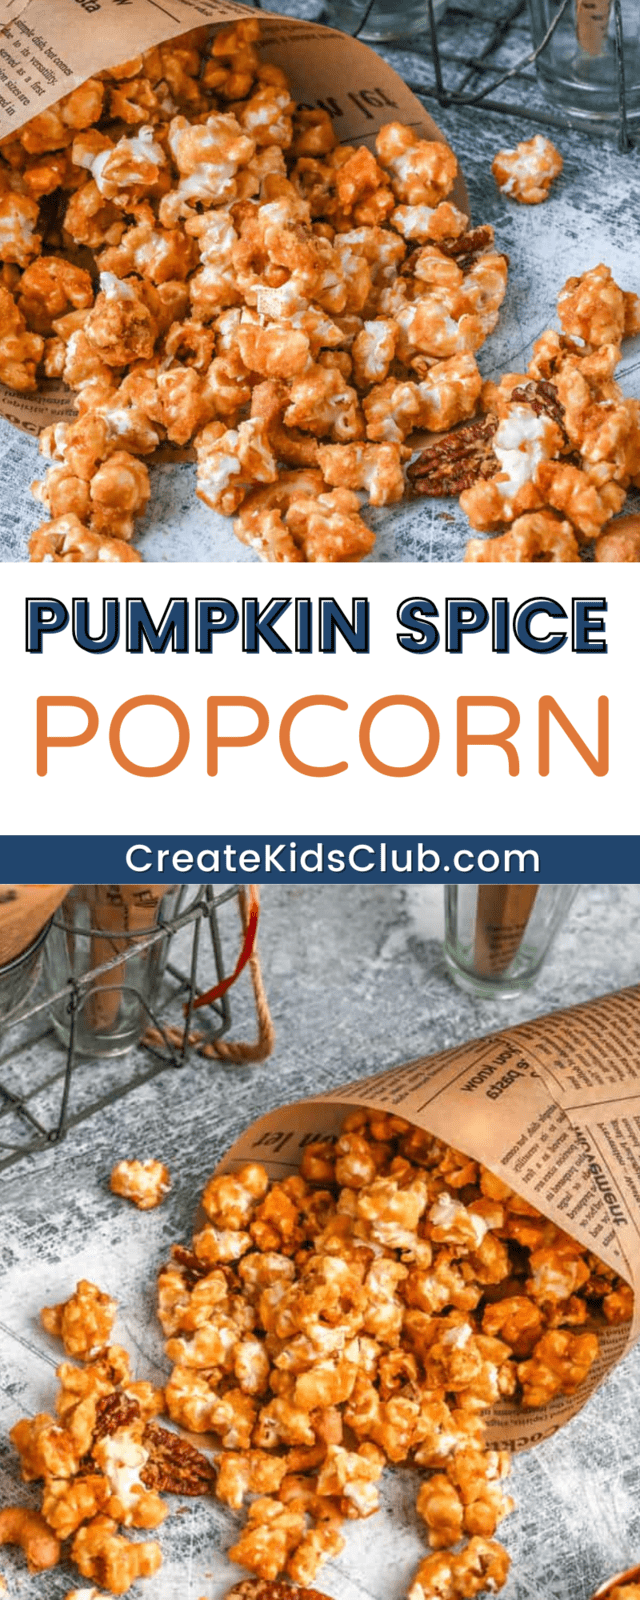 Pinterest image of pumpkin spice popcorn